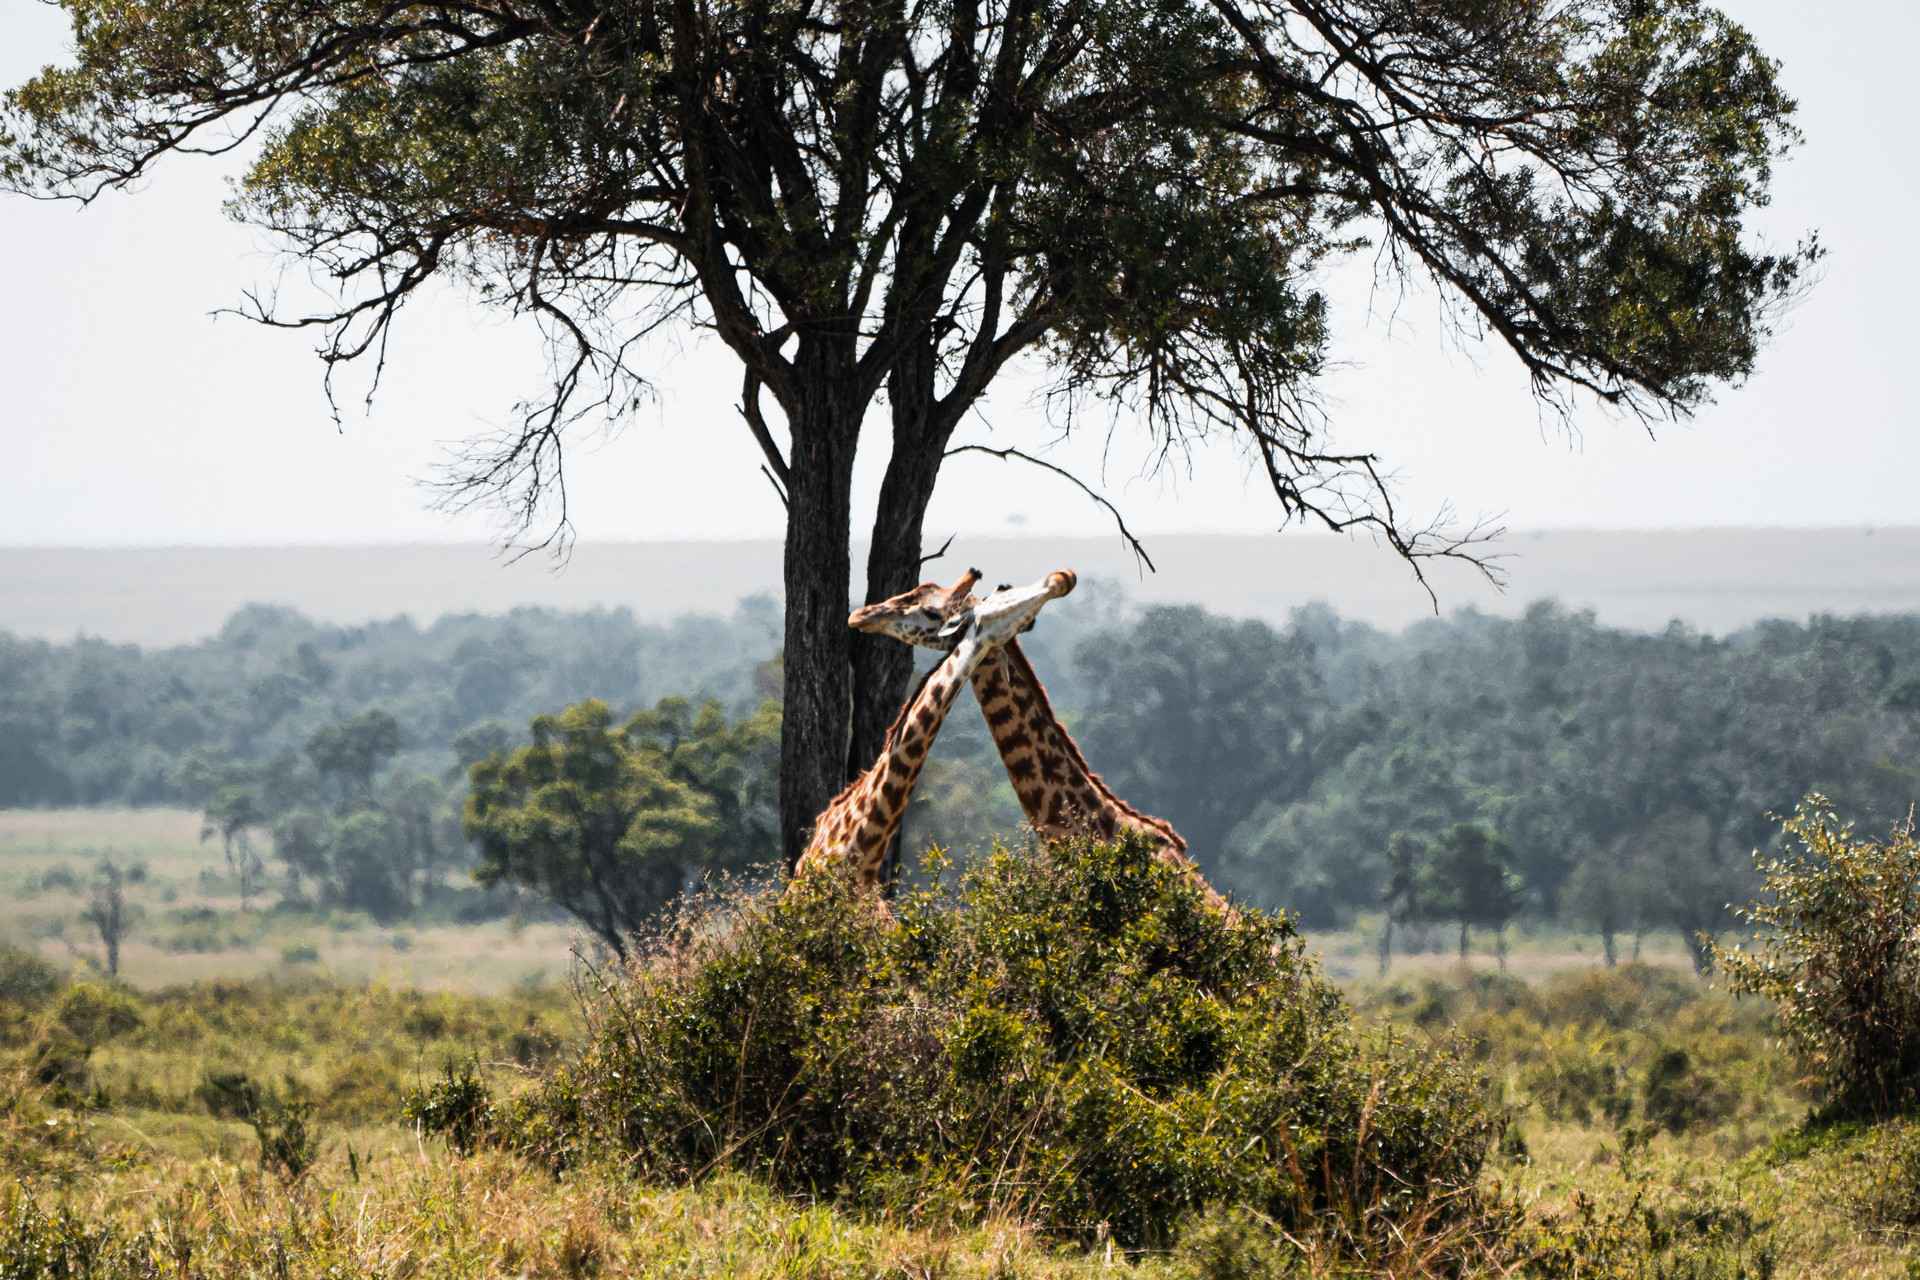 Giraffes fighting in Masai Mara, Kenya. The Great Migration